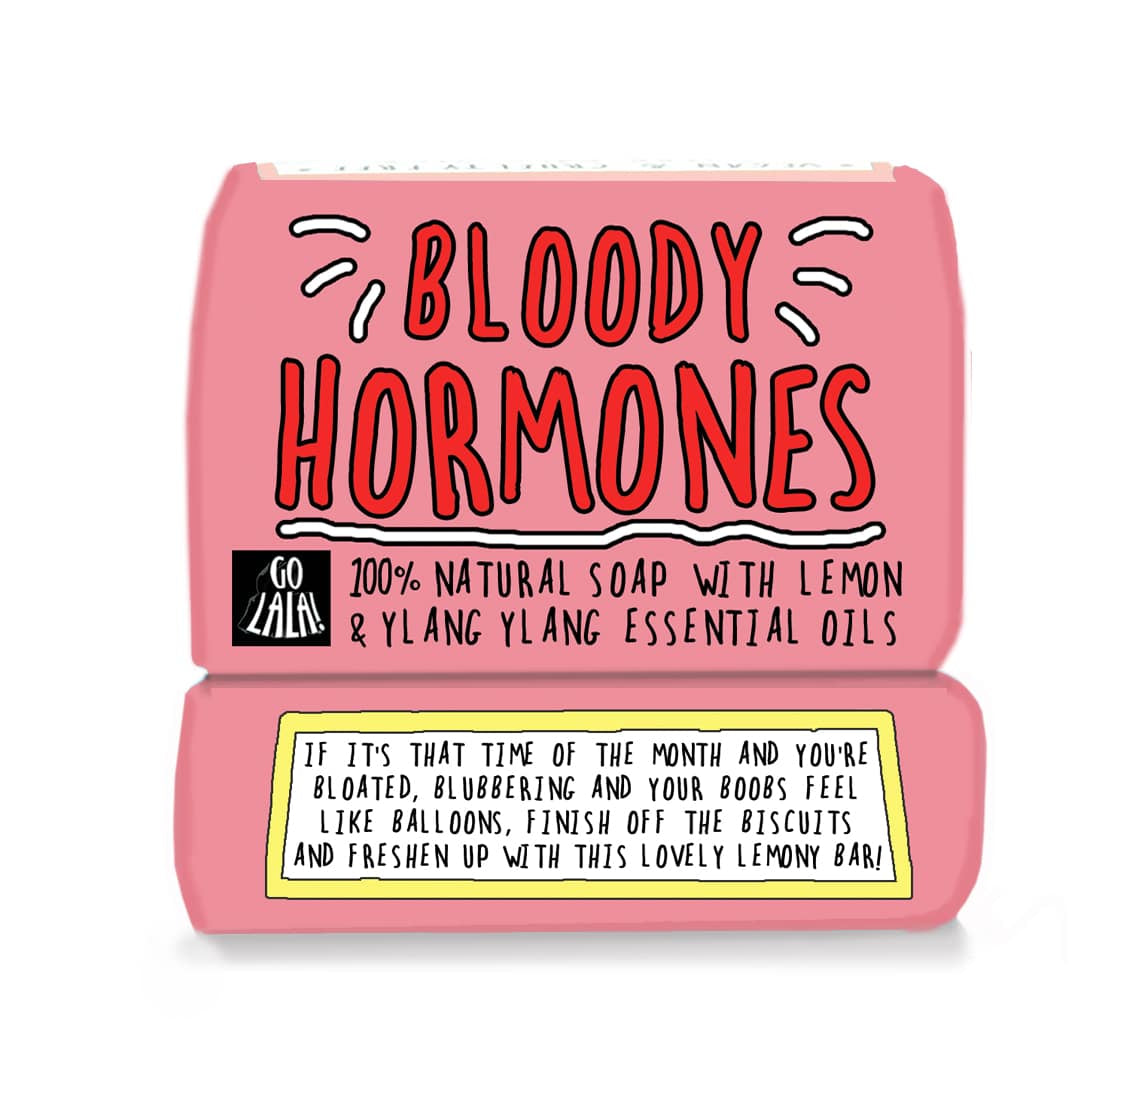 Bloody Hormones Soap Bar